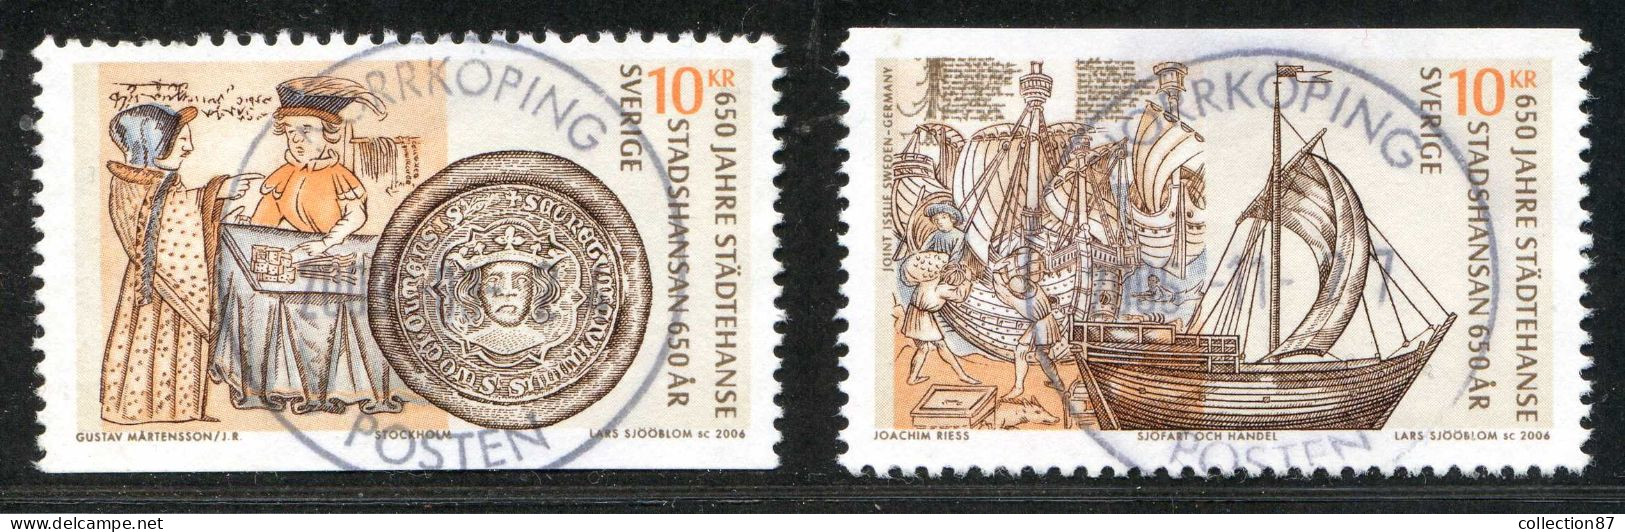 Réf 77 < SUEDE Année 2006 < Yvert N° 2527 + 2529 Ø Used < SWEDEN - Used Stamps